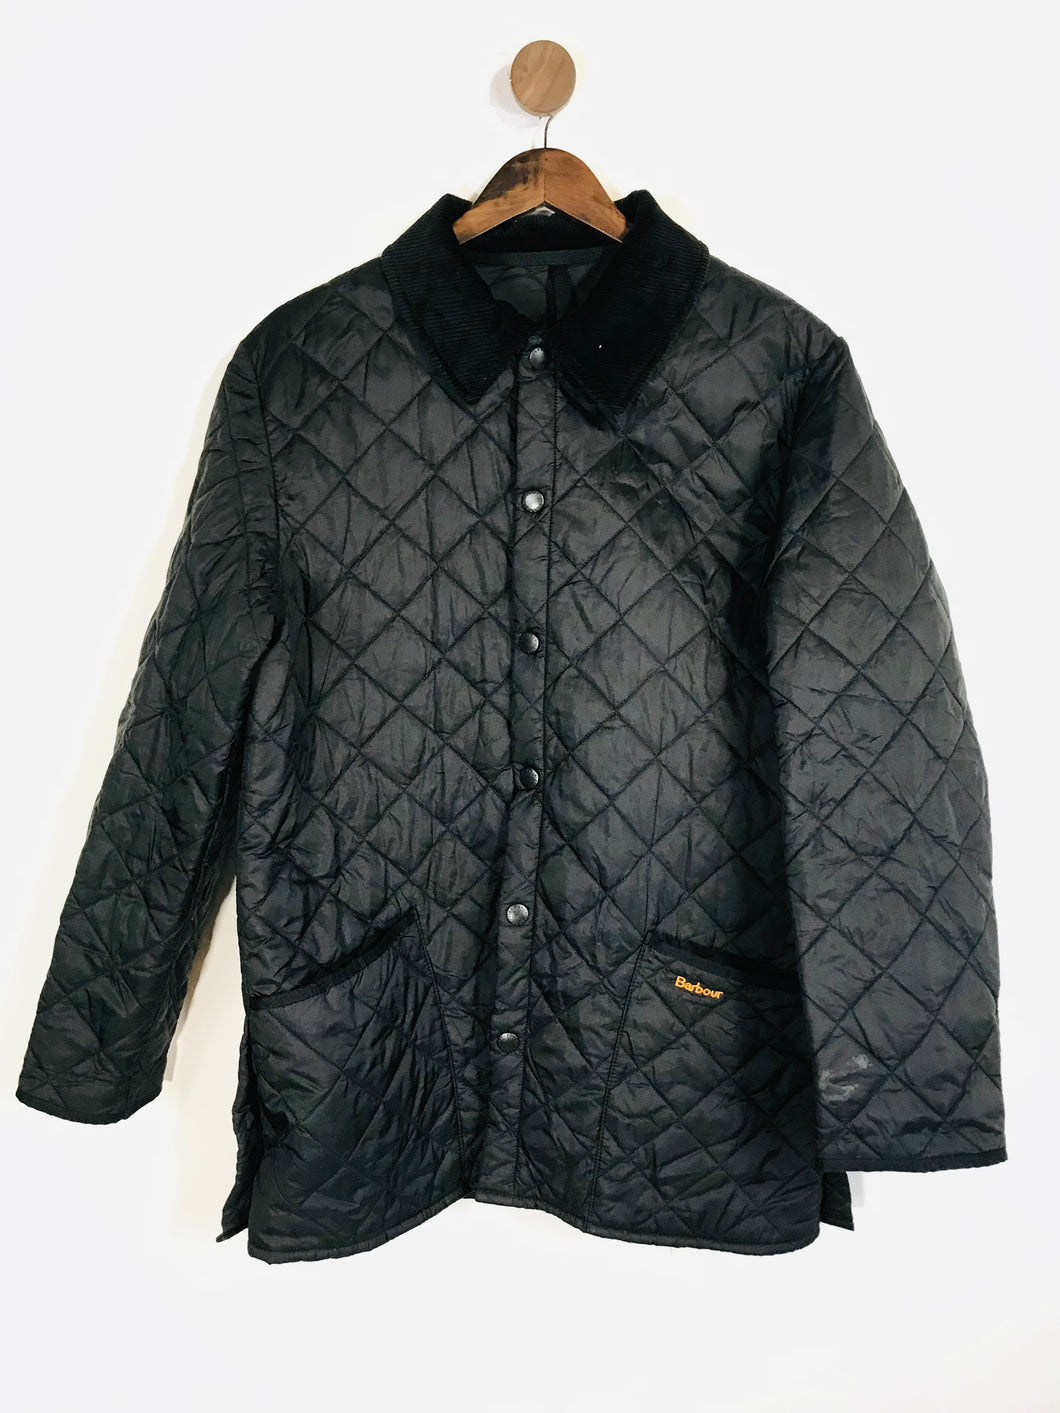 Barbour Men's Quilted Jacket | S | Black